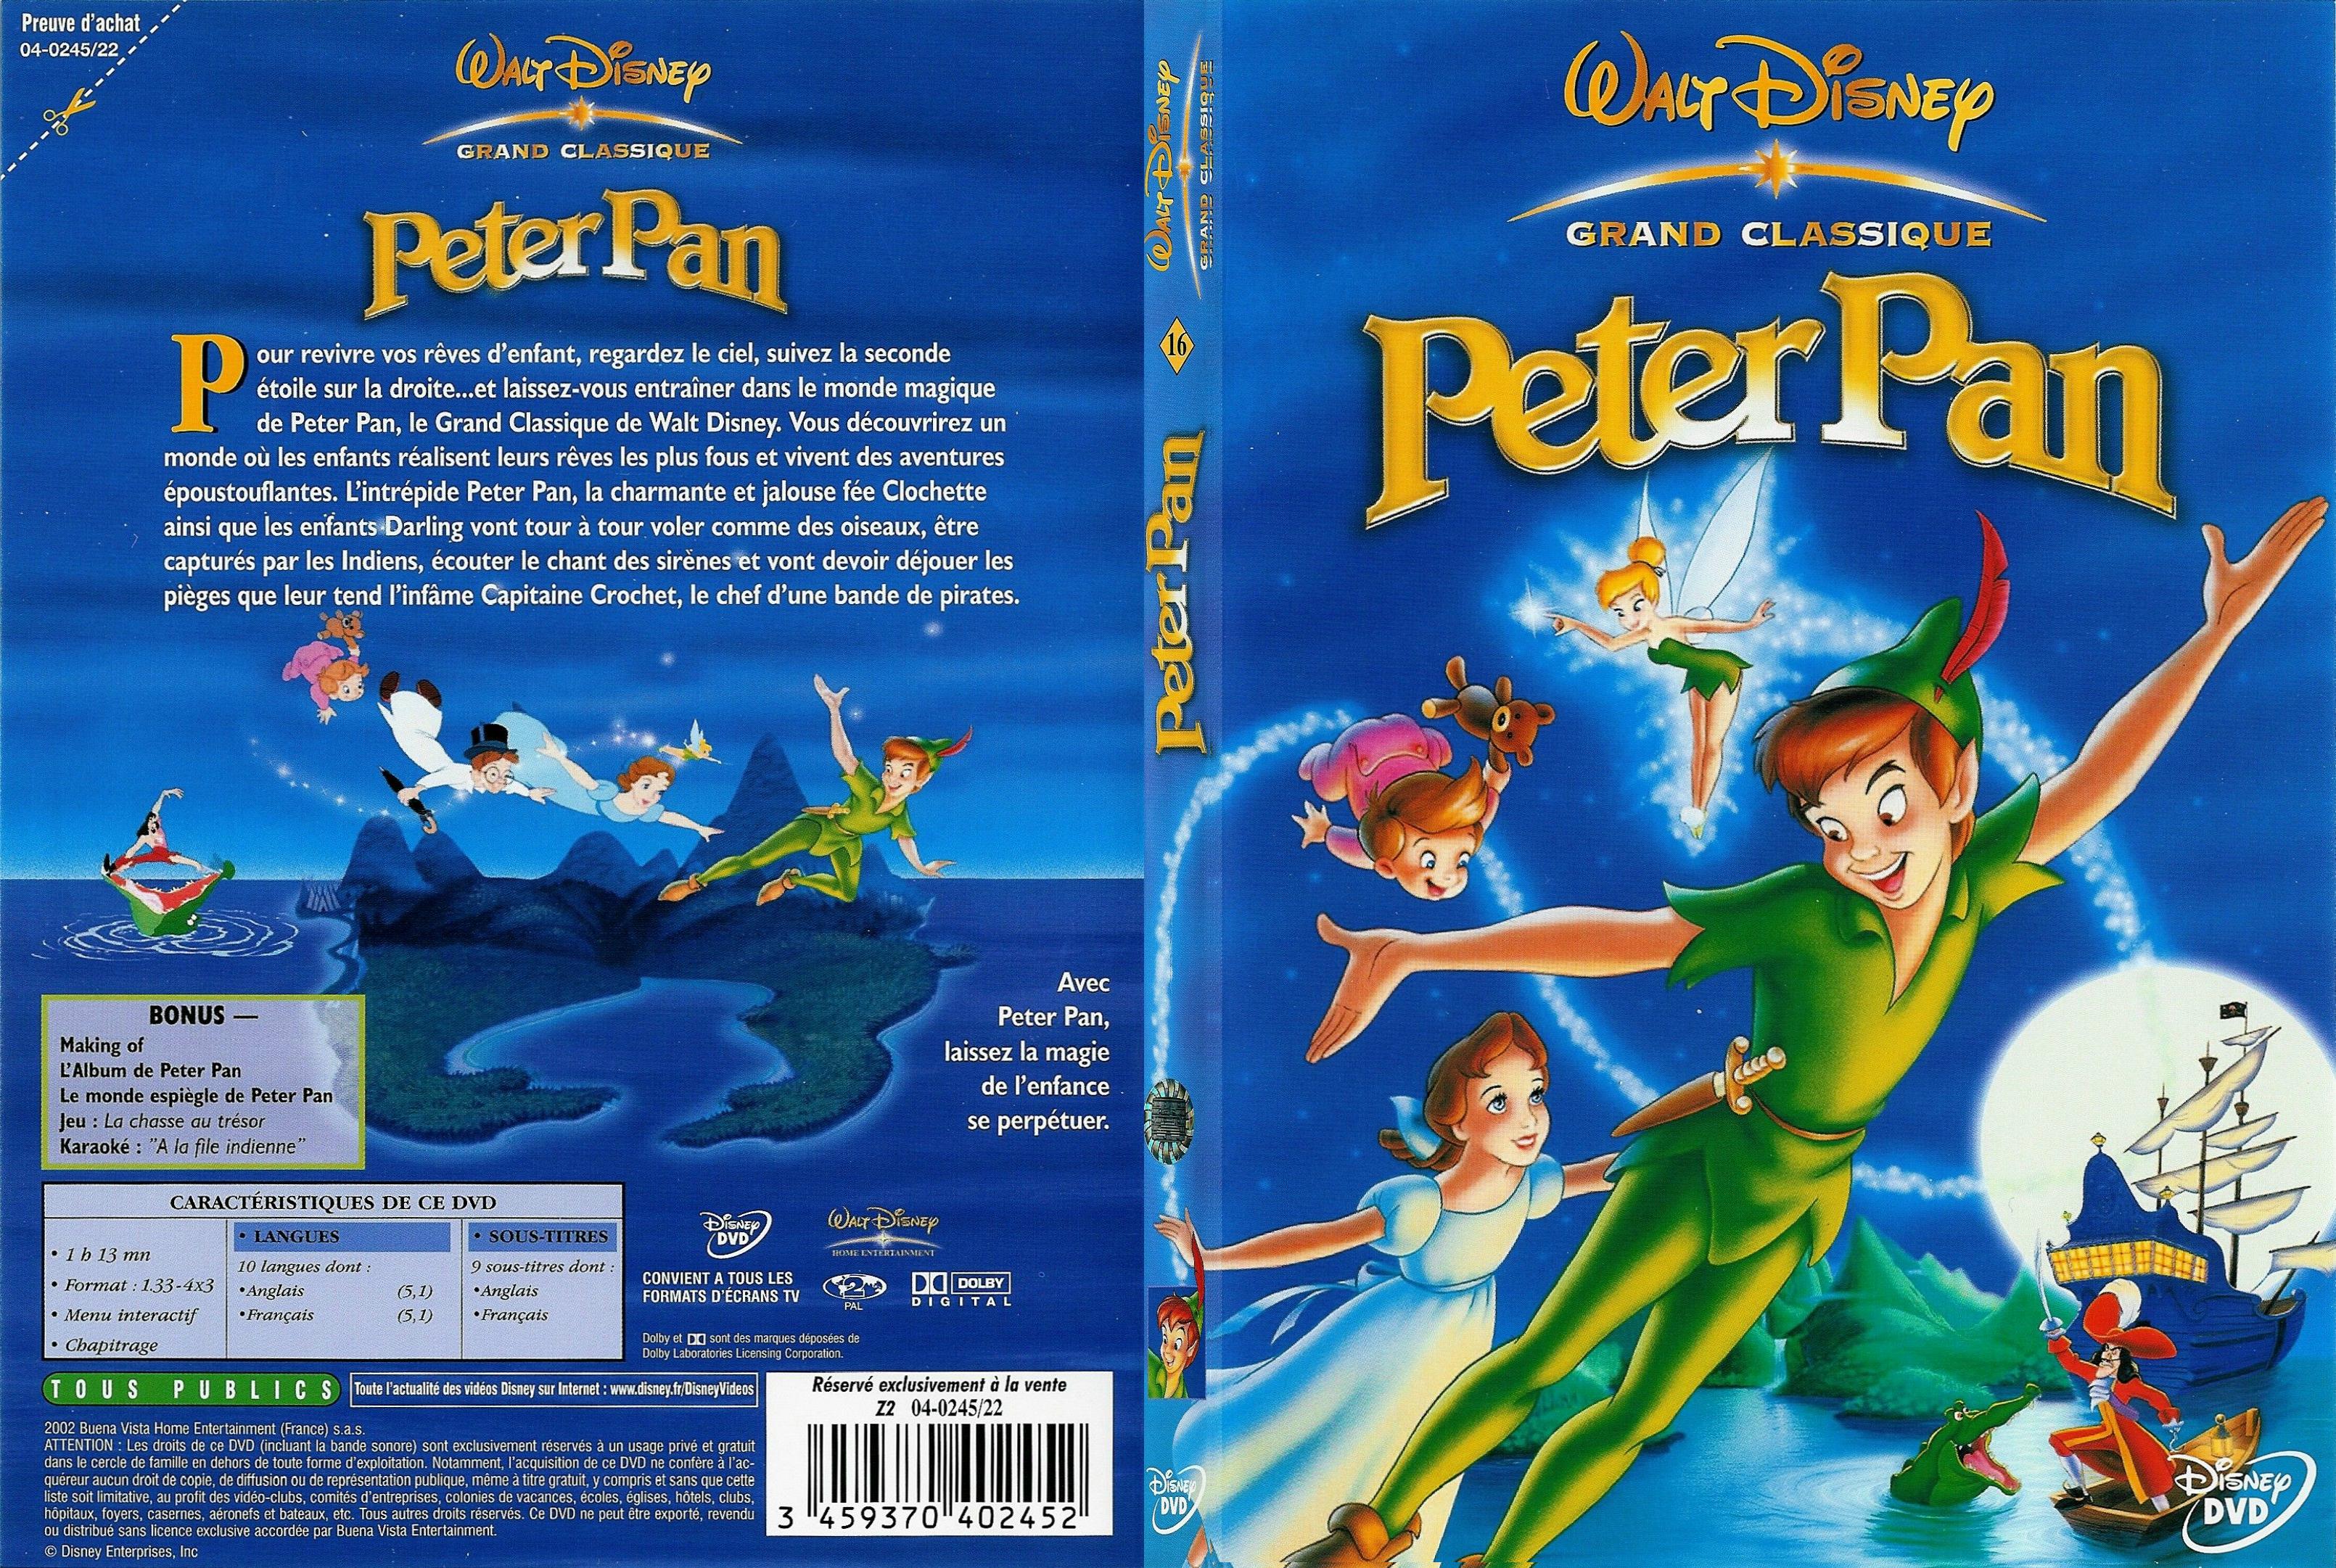 Jaquette DVD Peter Pan - SLIM v2